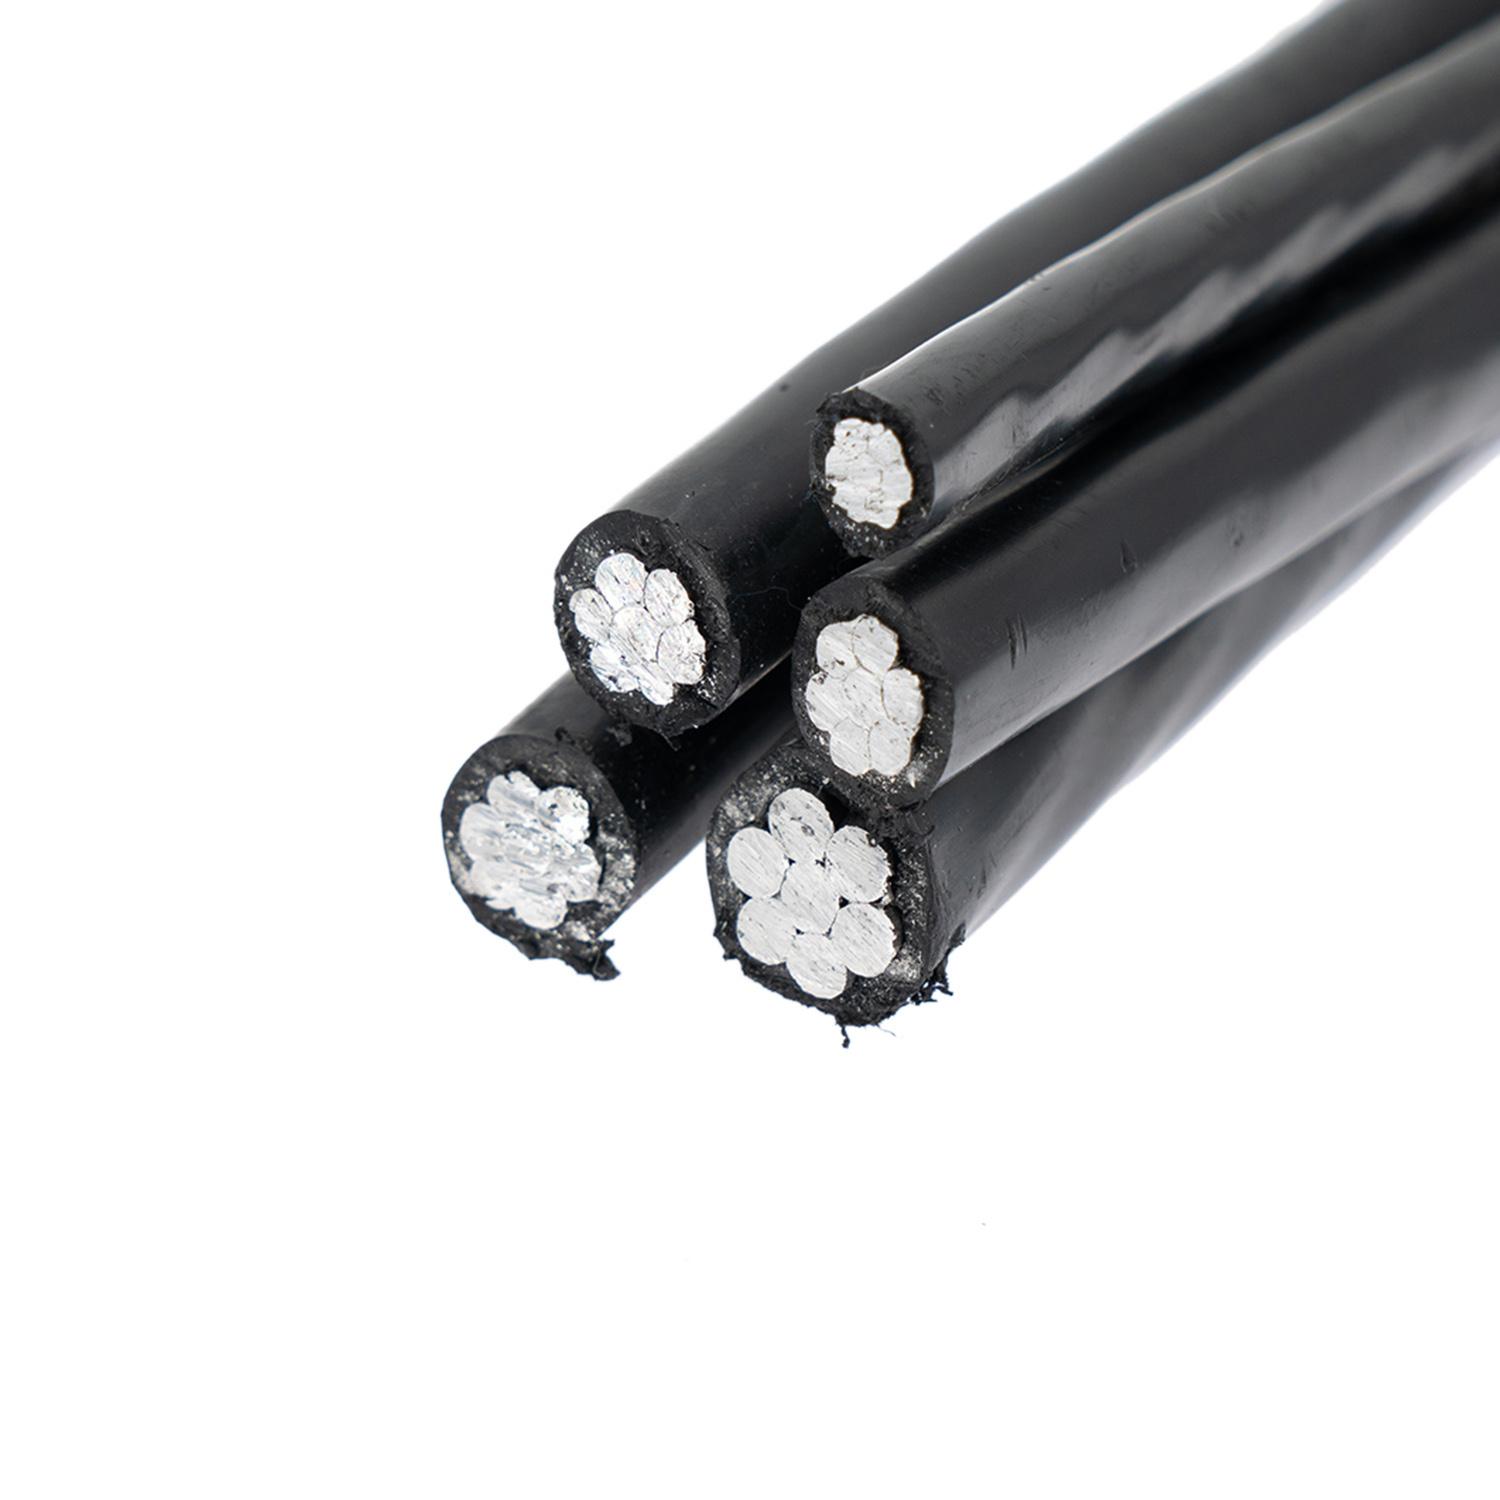 ABC Aluminum Bundle Overhead Cable 3*70+70mm2 Overhead Service Drop Cable